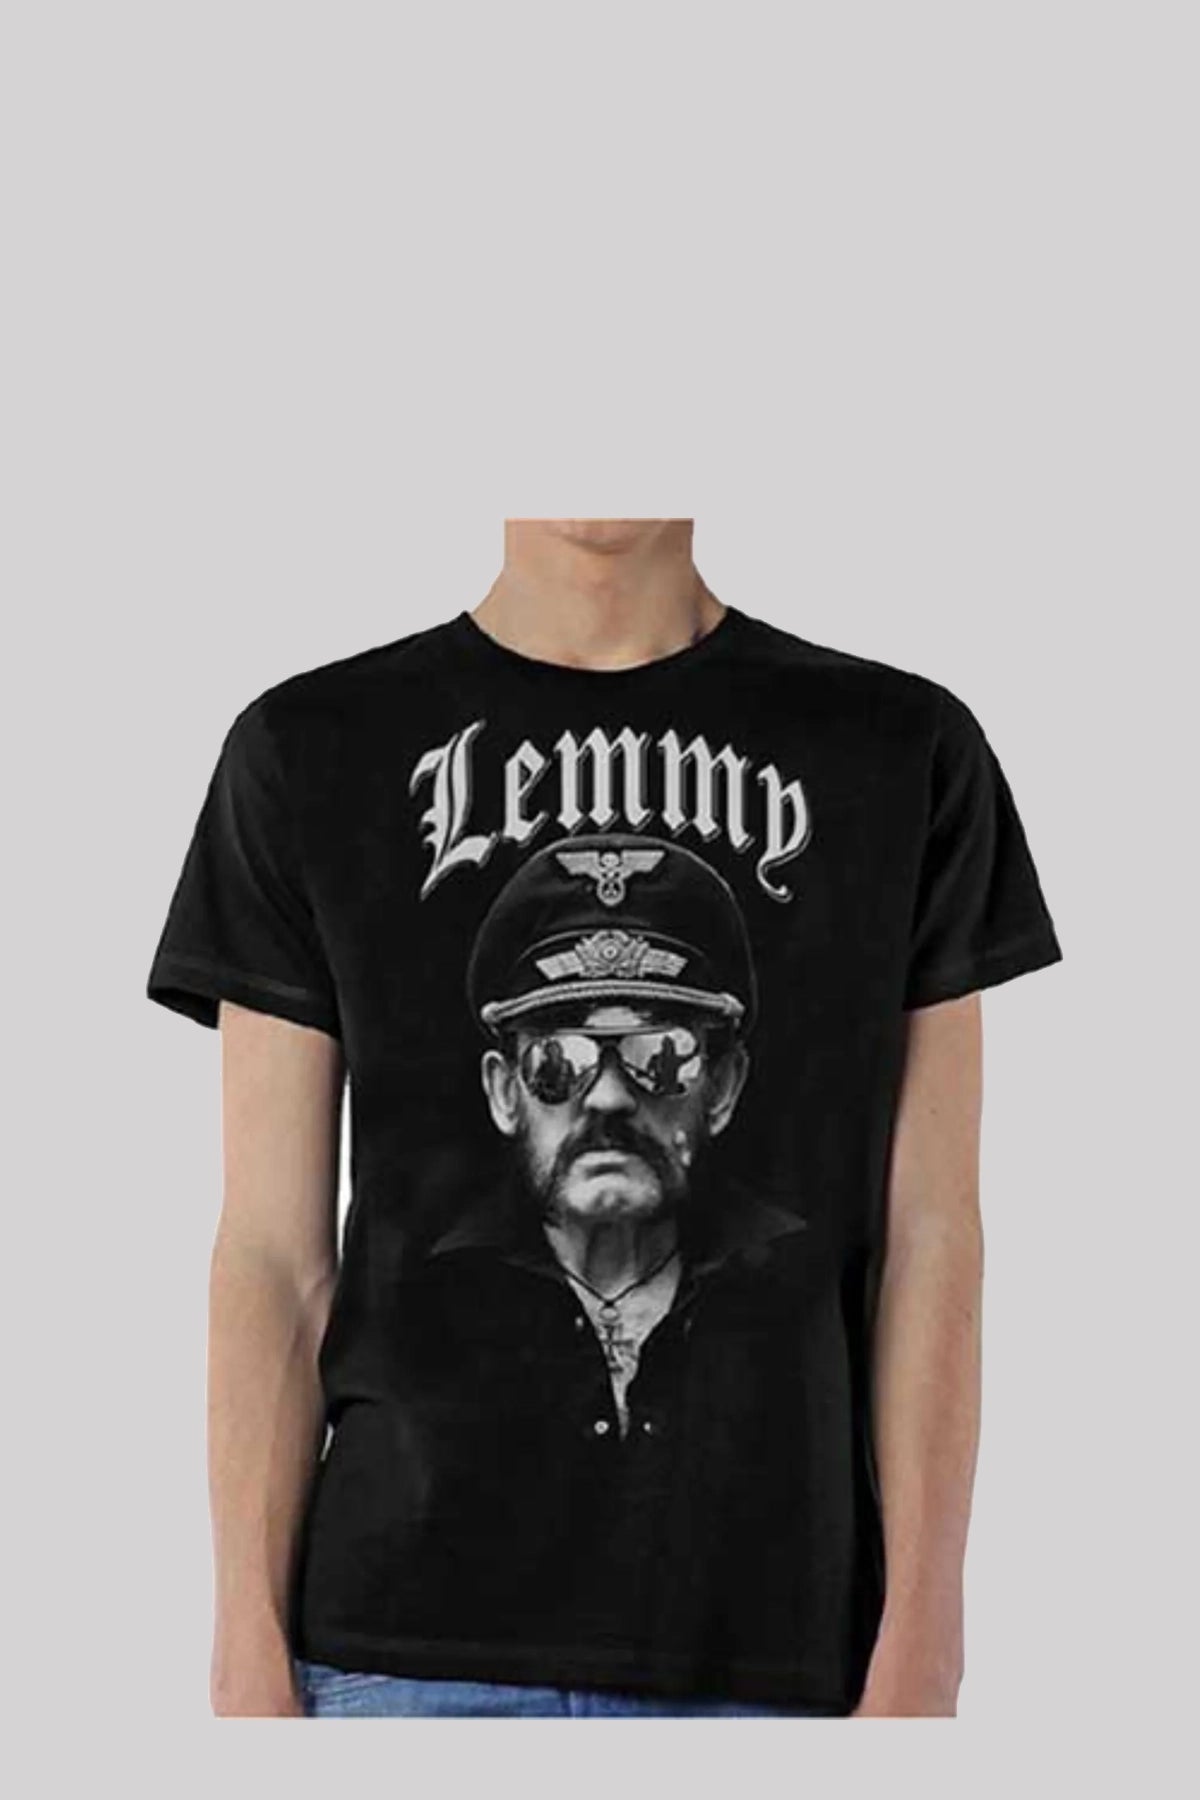 Lemmy MF'ing Motorhead T-Shirt